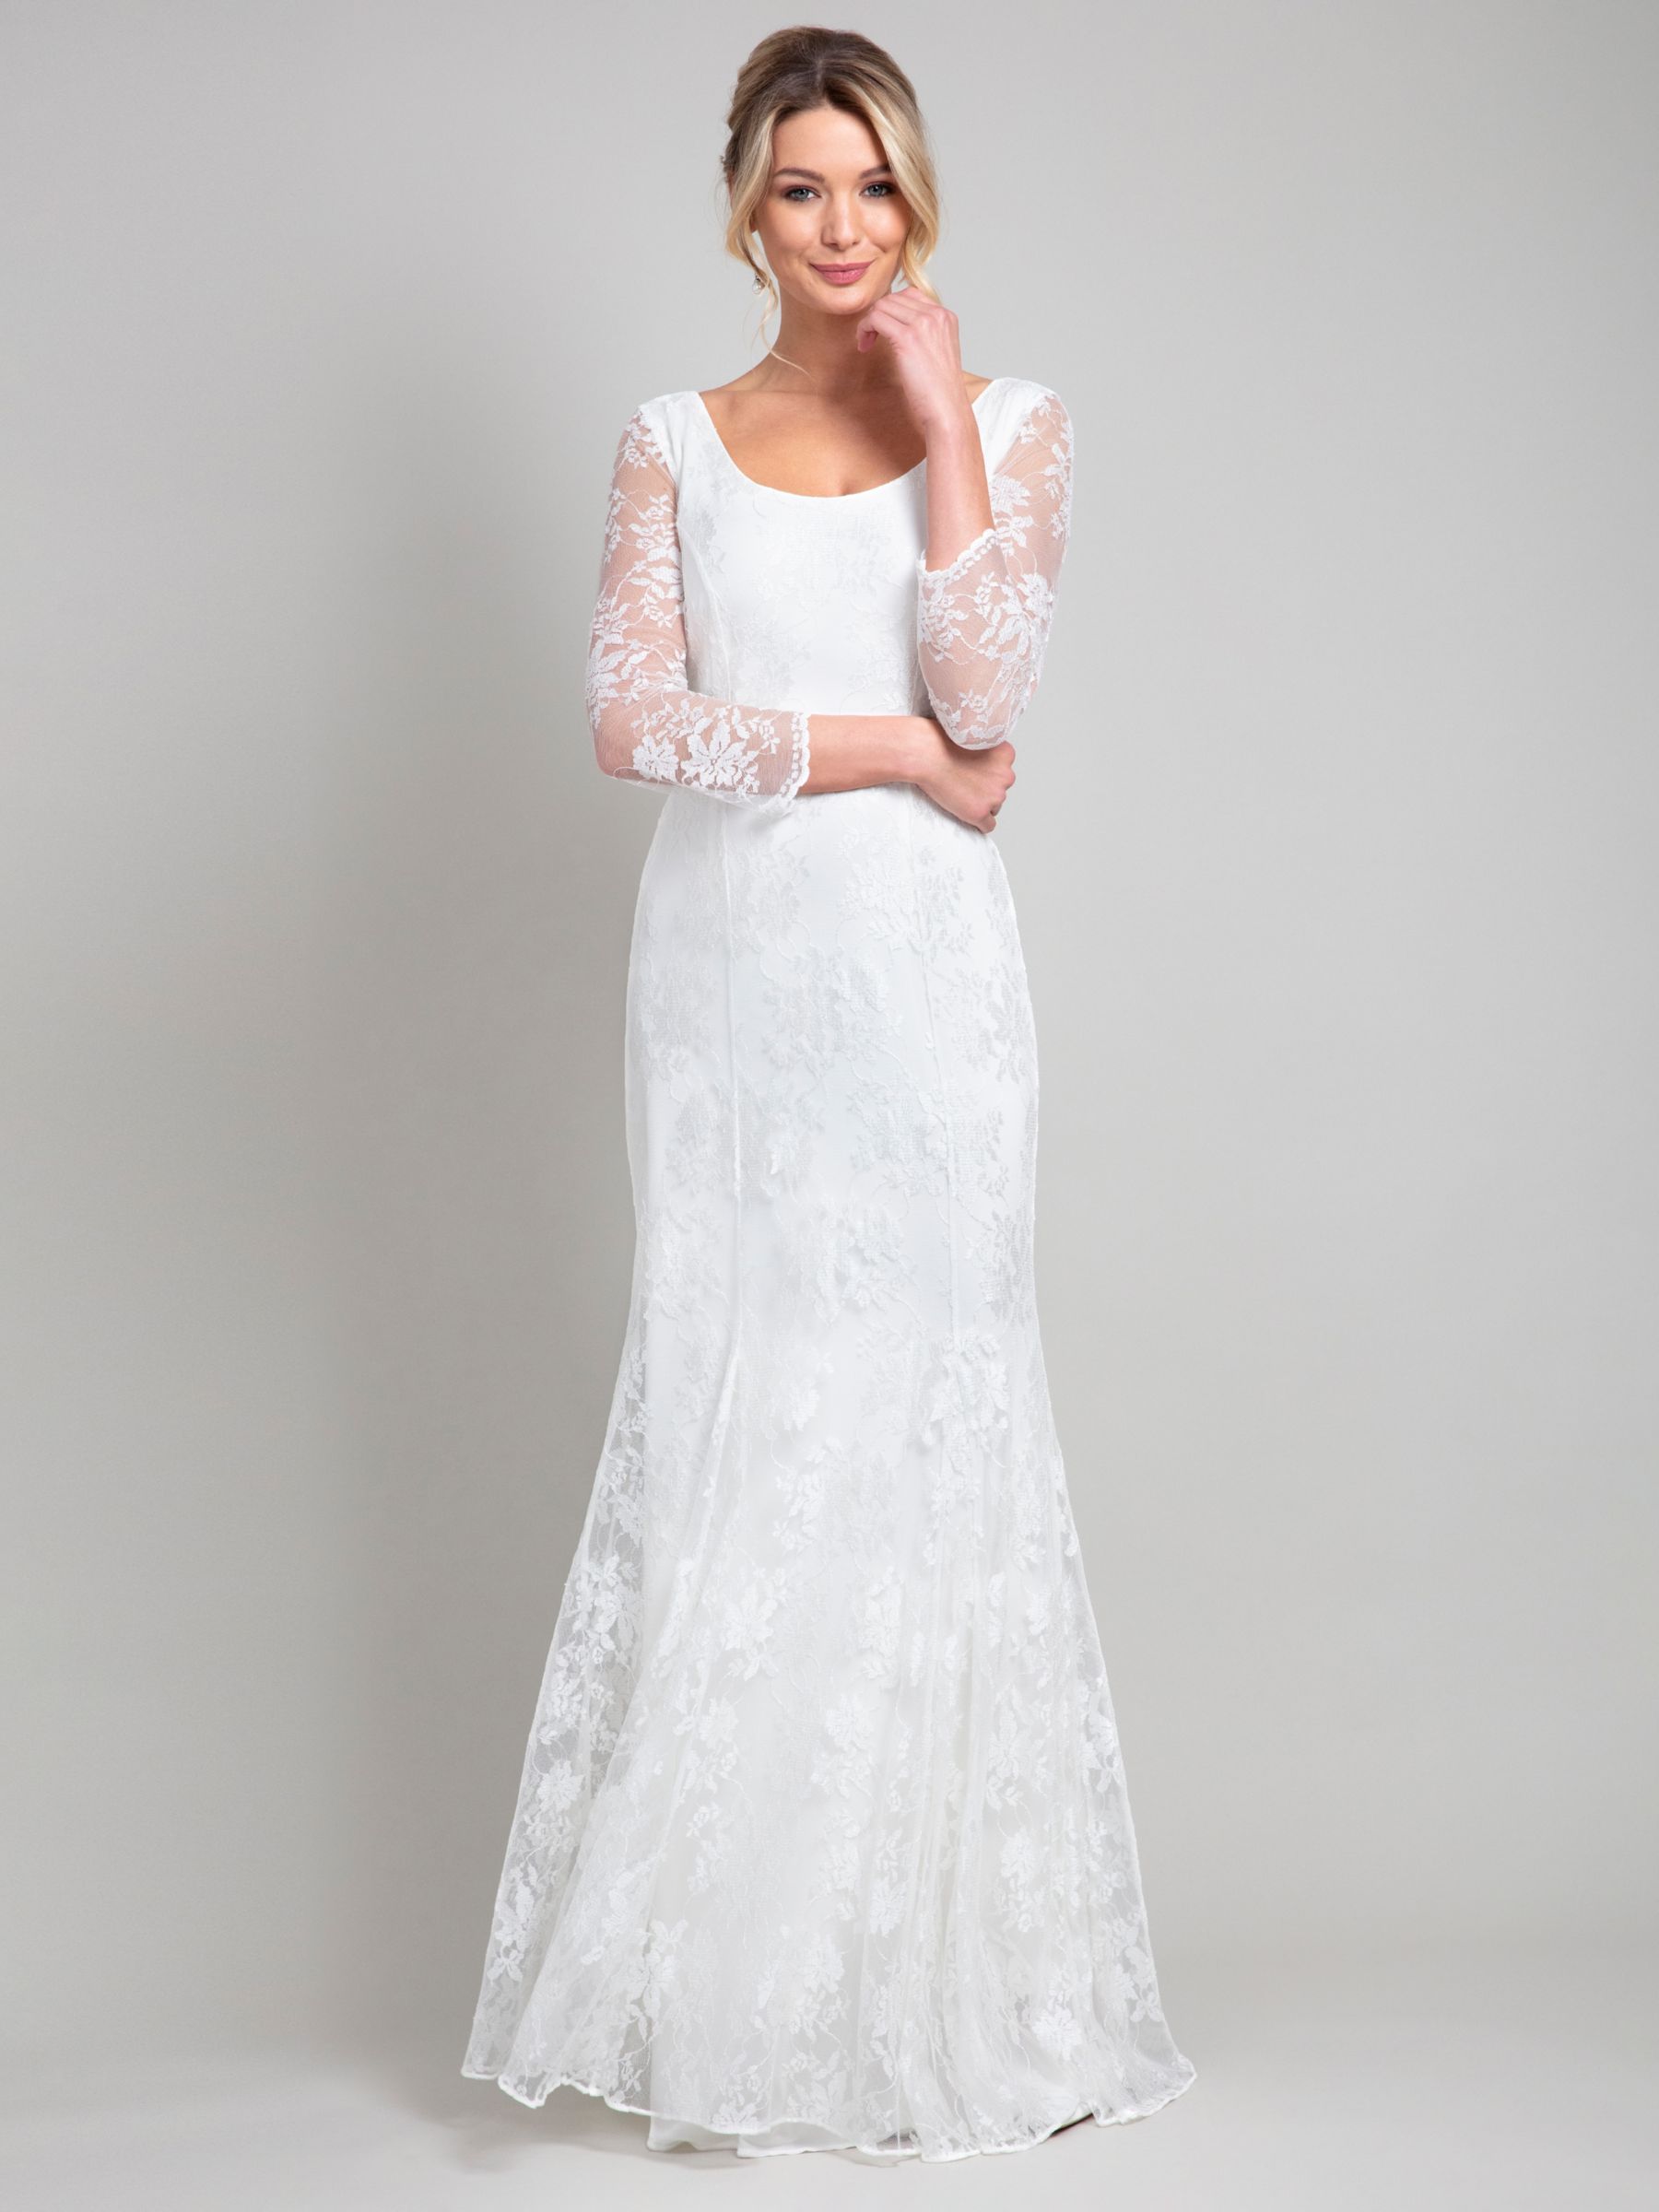 Alie Street Maria Floor Length Wedding Gown, Ivory, 6-8